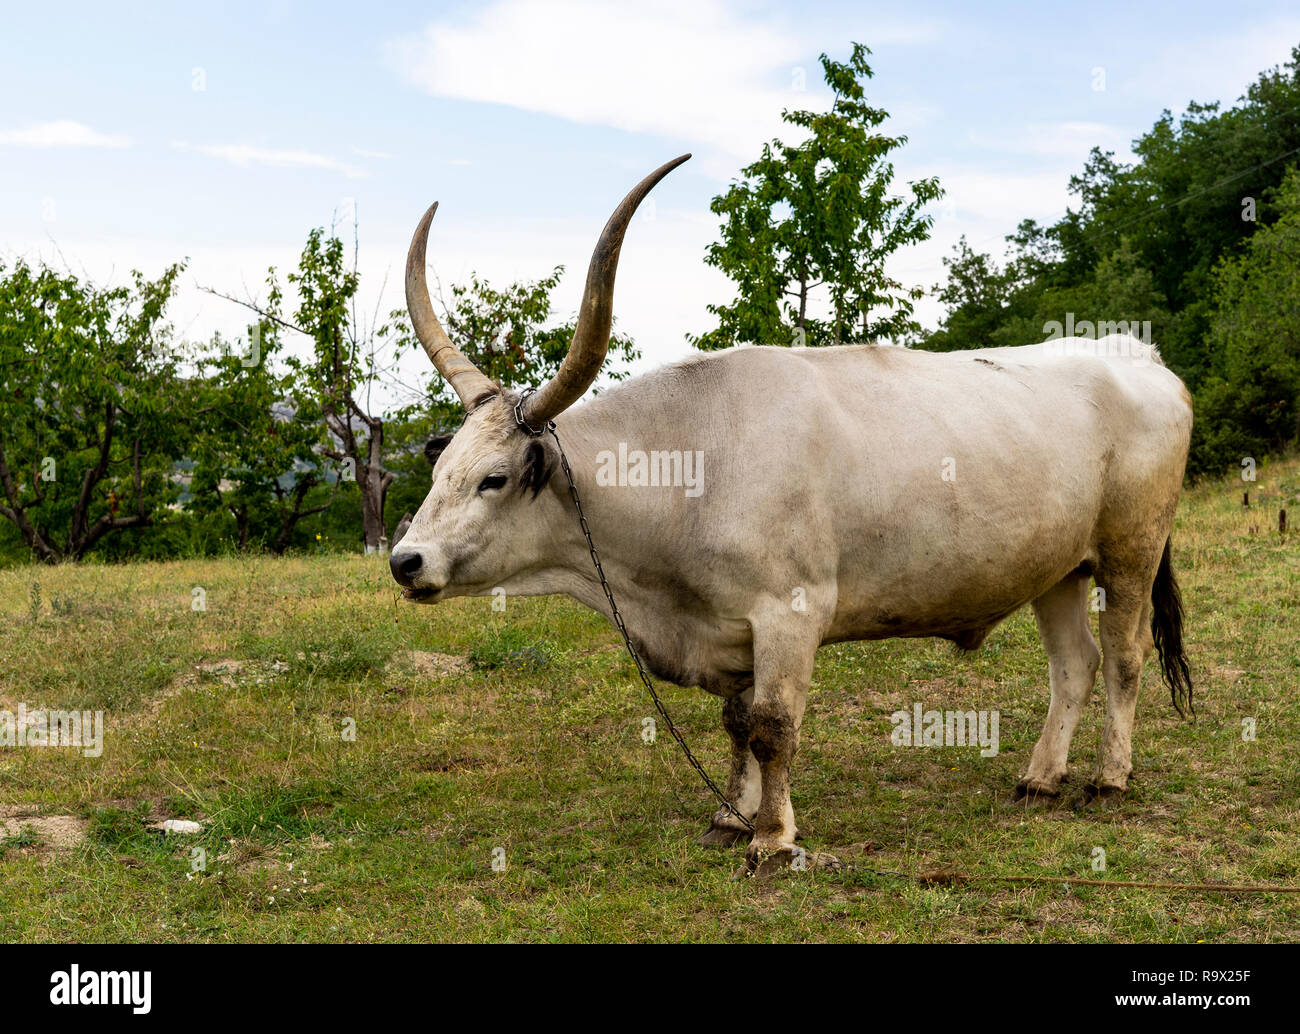 White Buffalo with long horns. Stock Photo